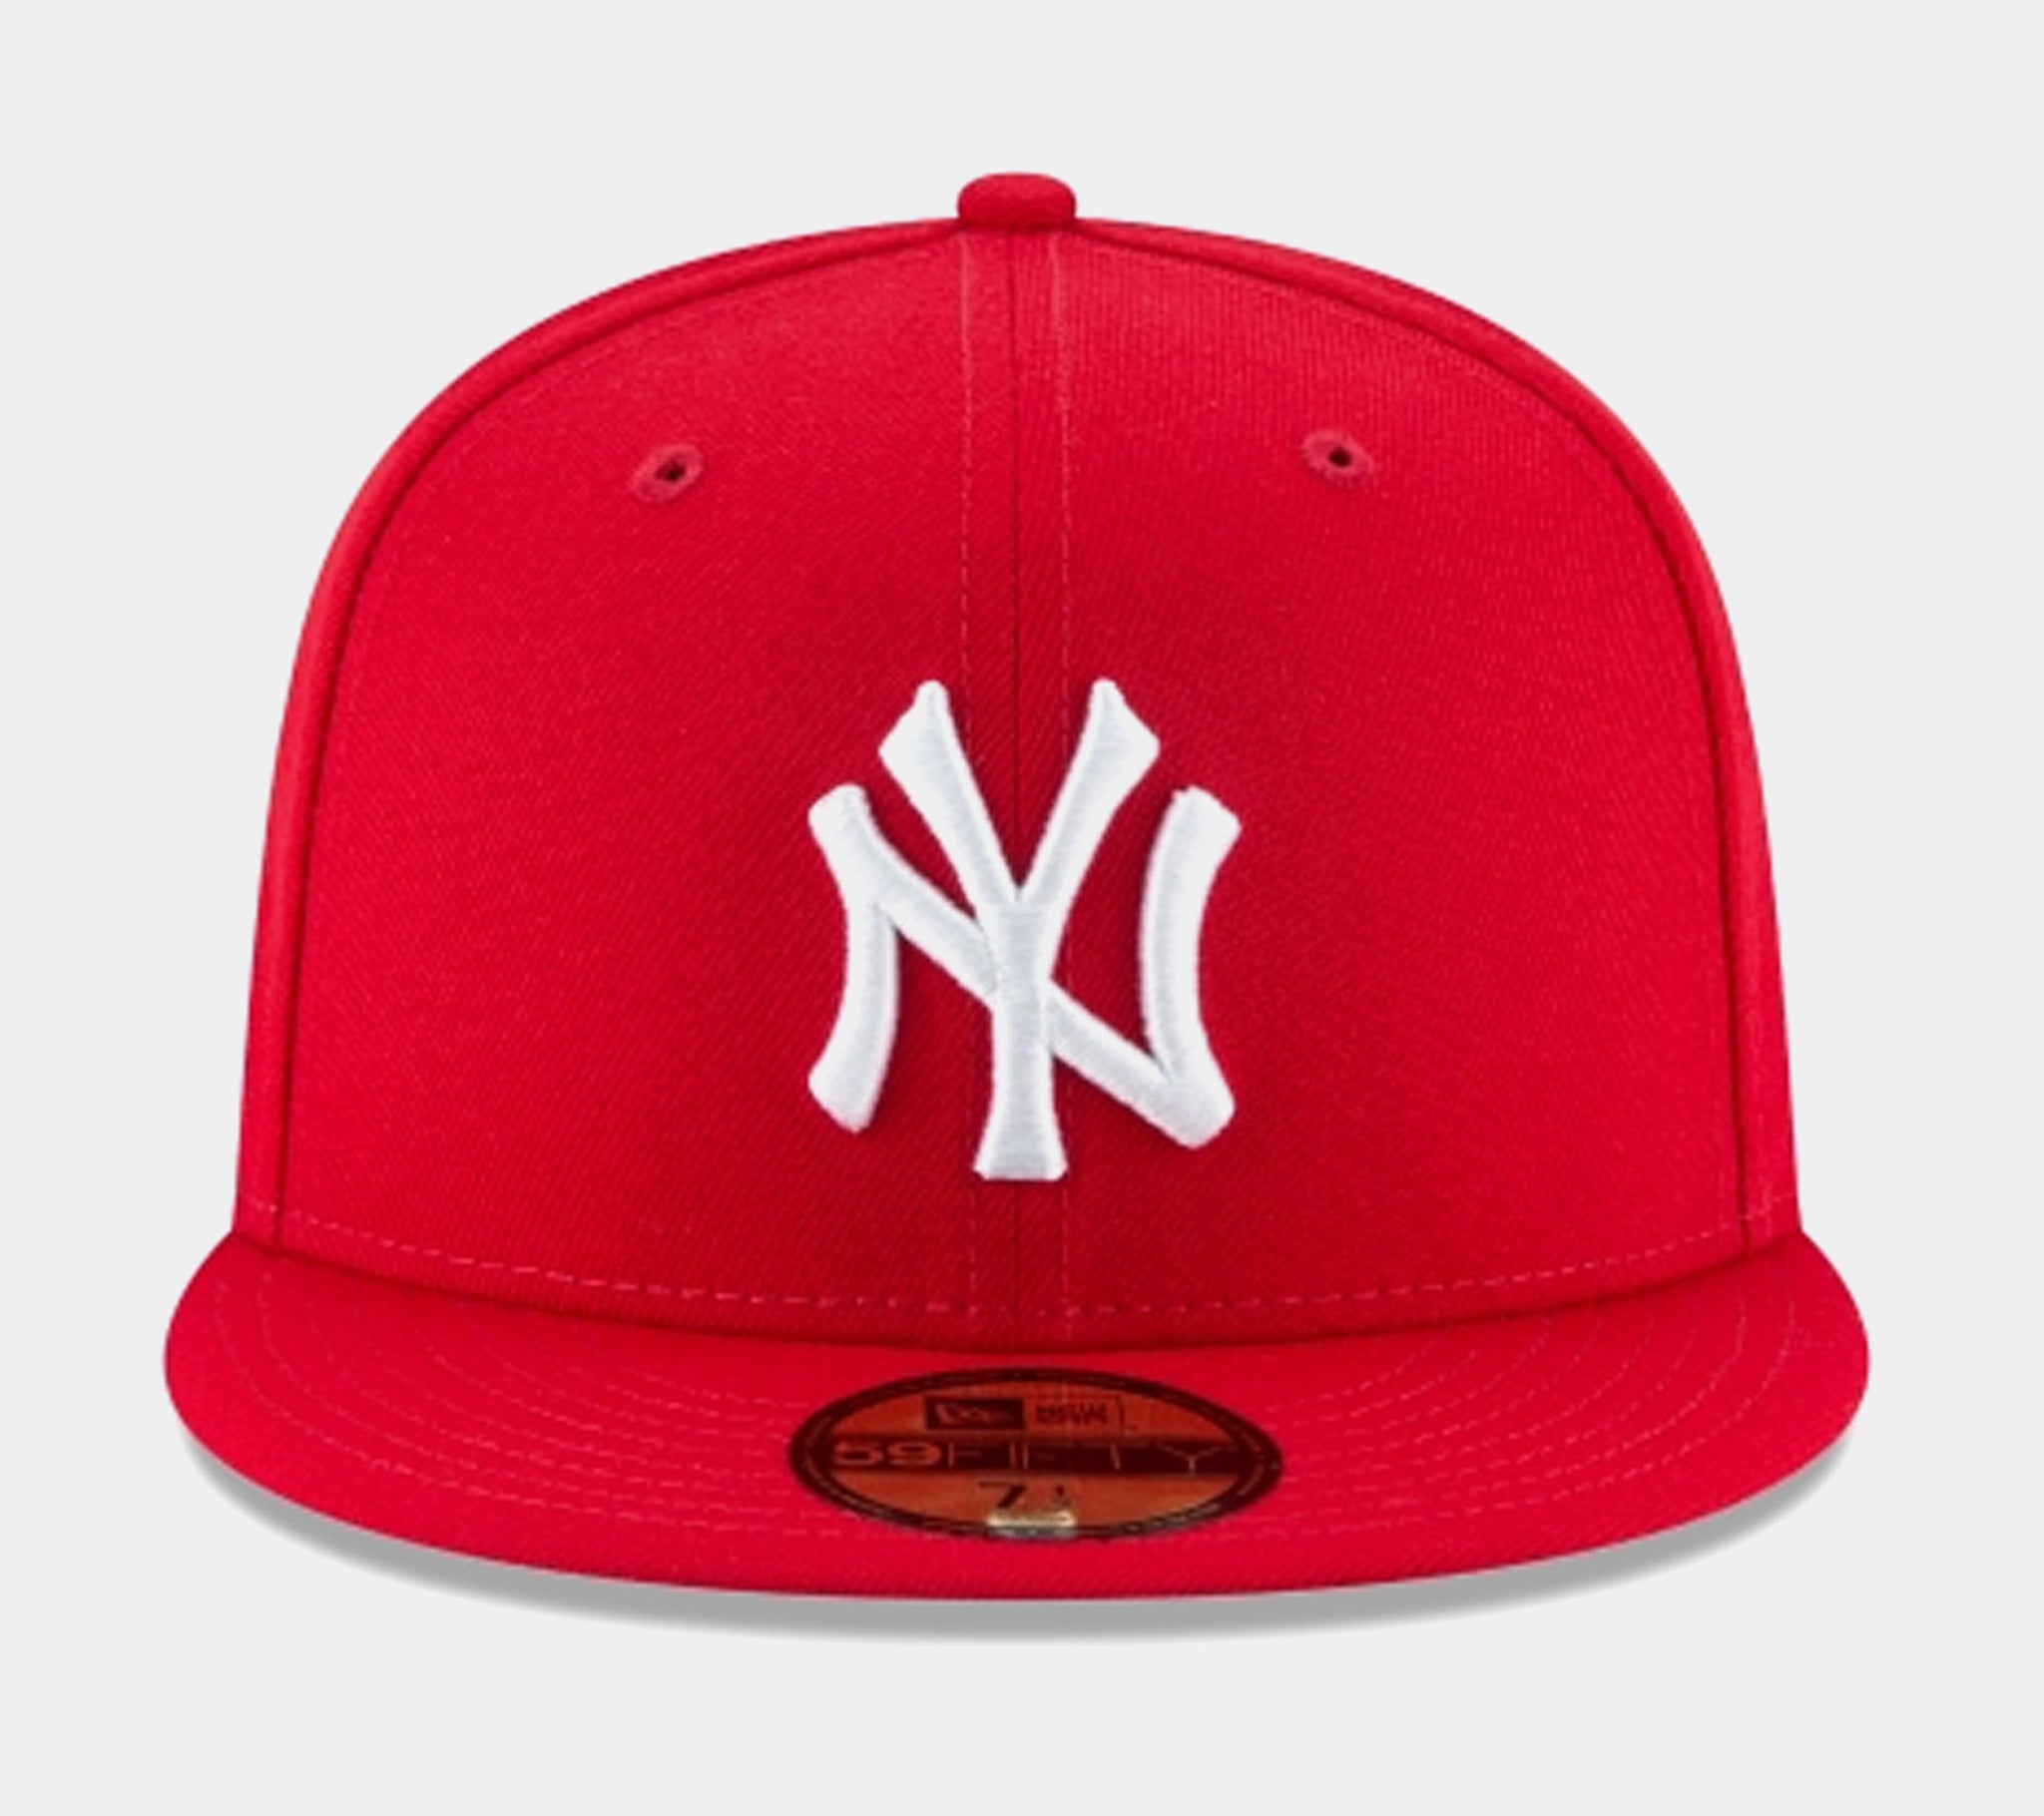 New Era Men's Hat - Red